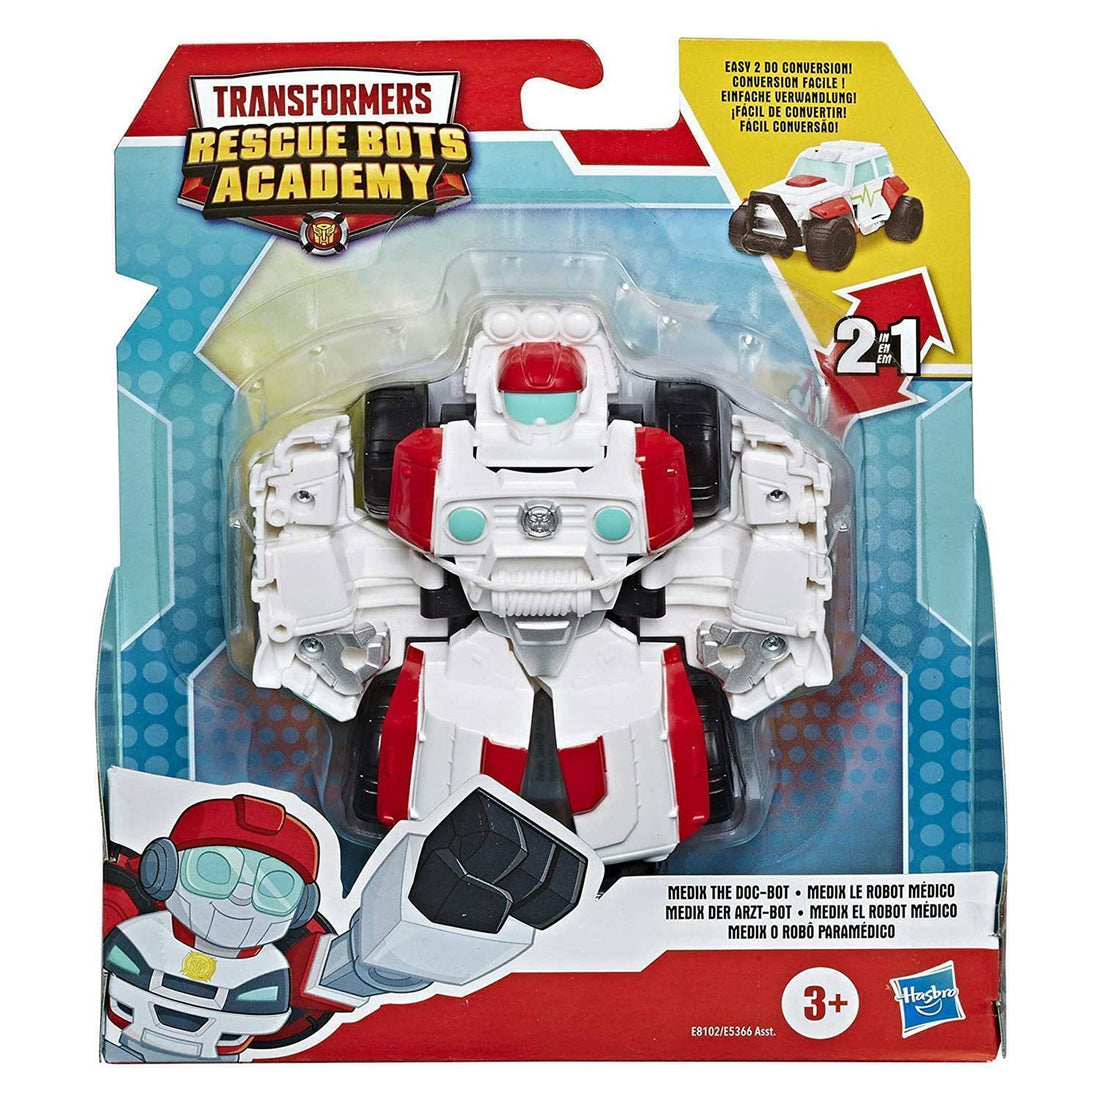 Transformers Rescue Bots Academy: Dynamic Duo Variation Toys - MEDIX